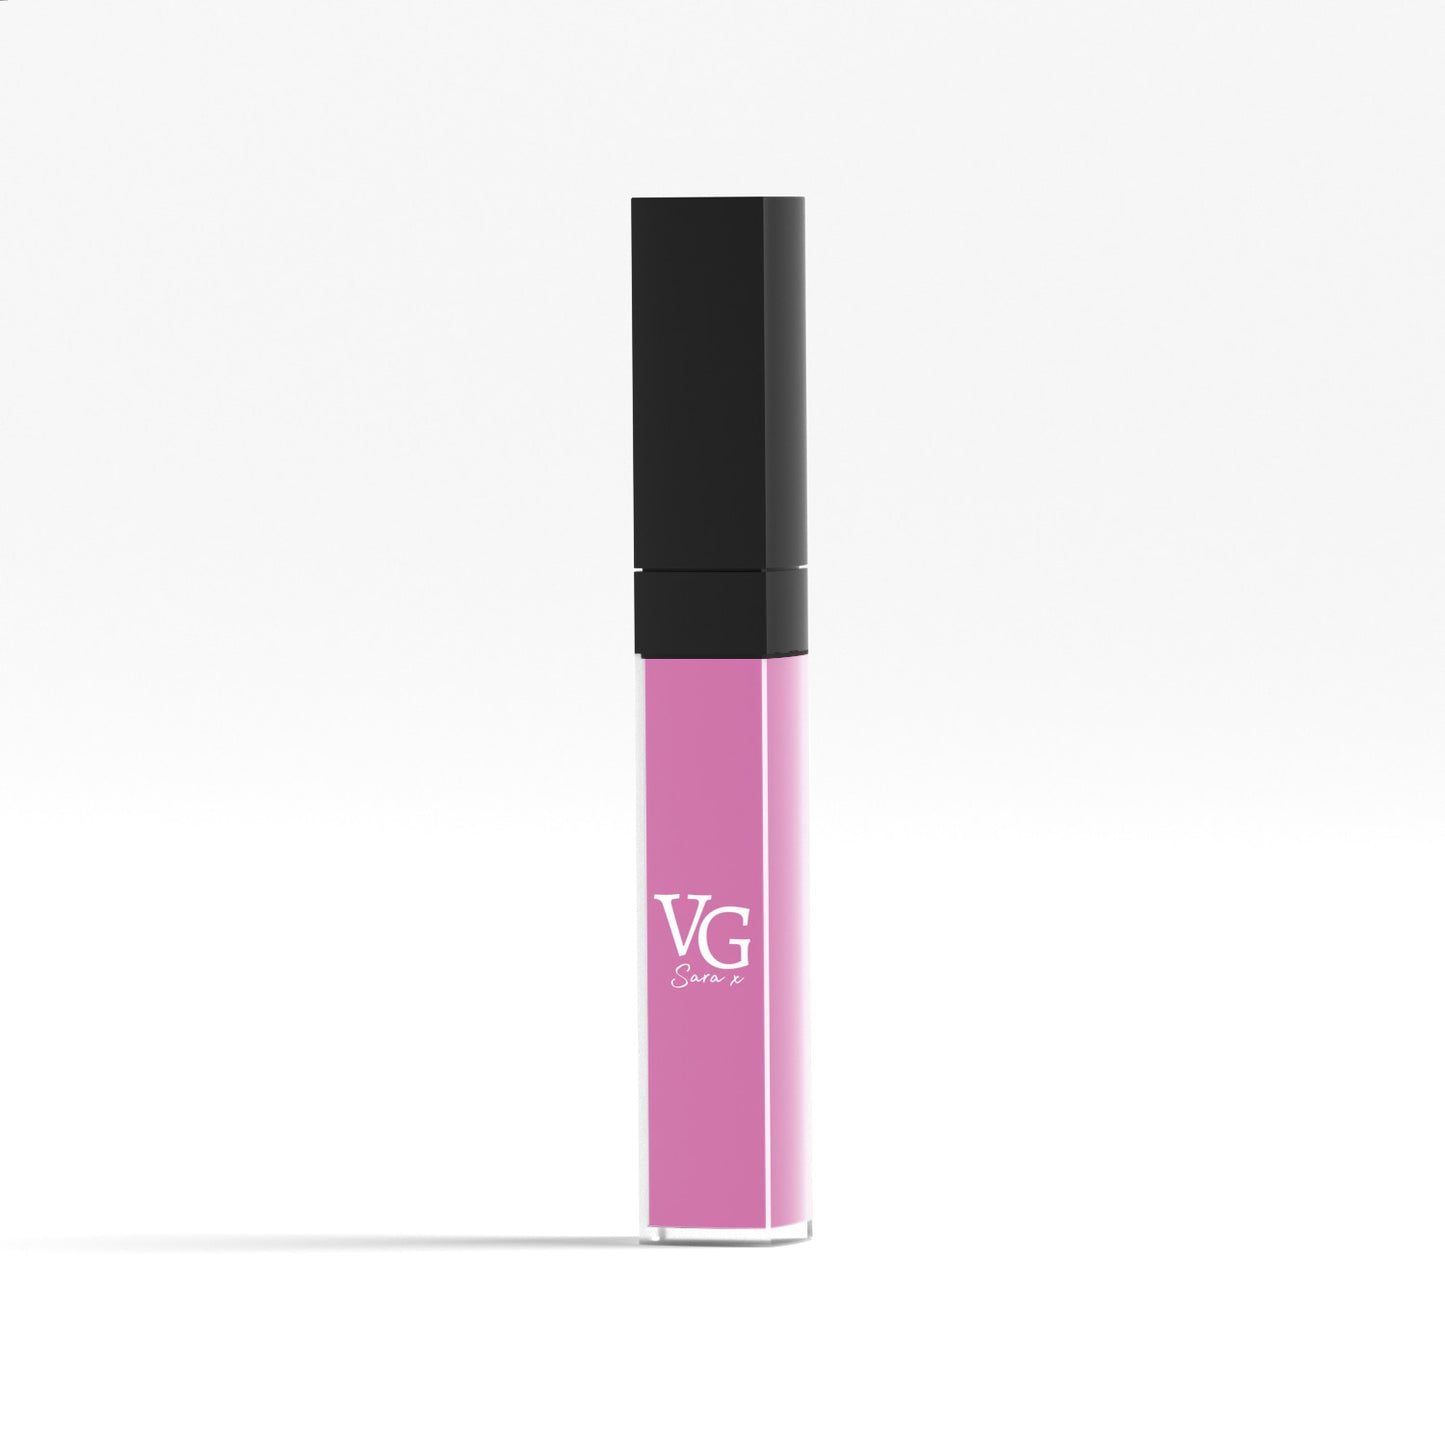 Vegan liquid lipstick in vibrant pink with VG label